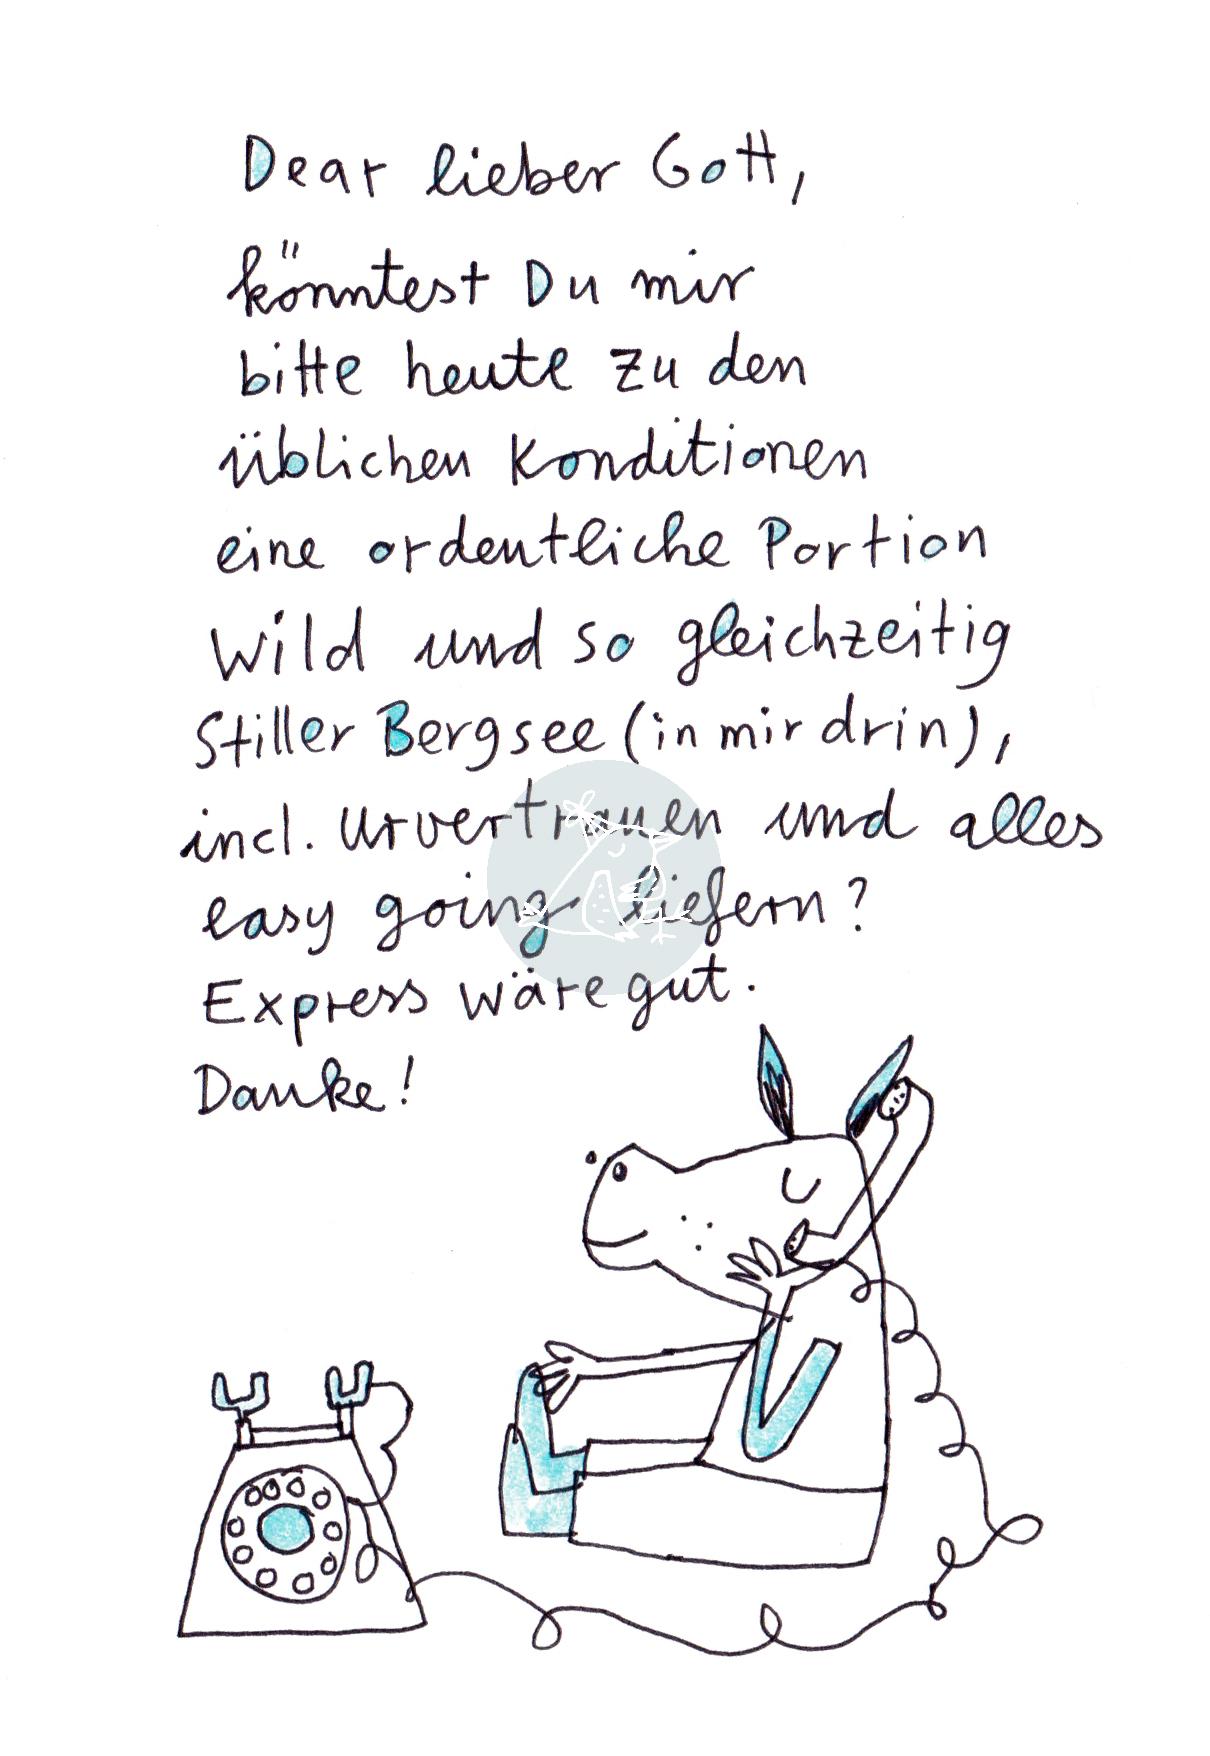 Postkarte - Dear lieber Gott - 10 x DIN A6 - karindrawings